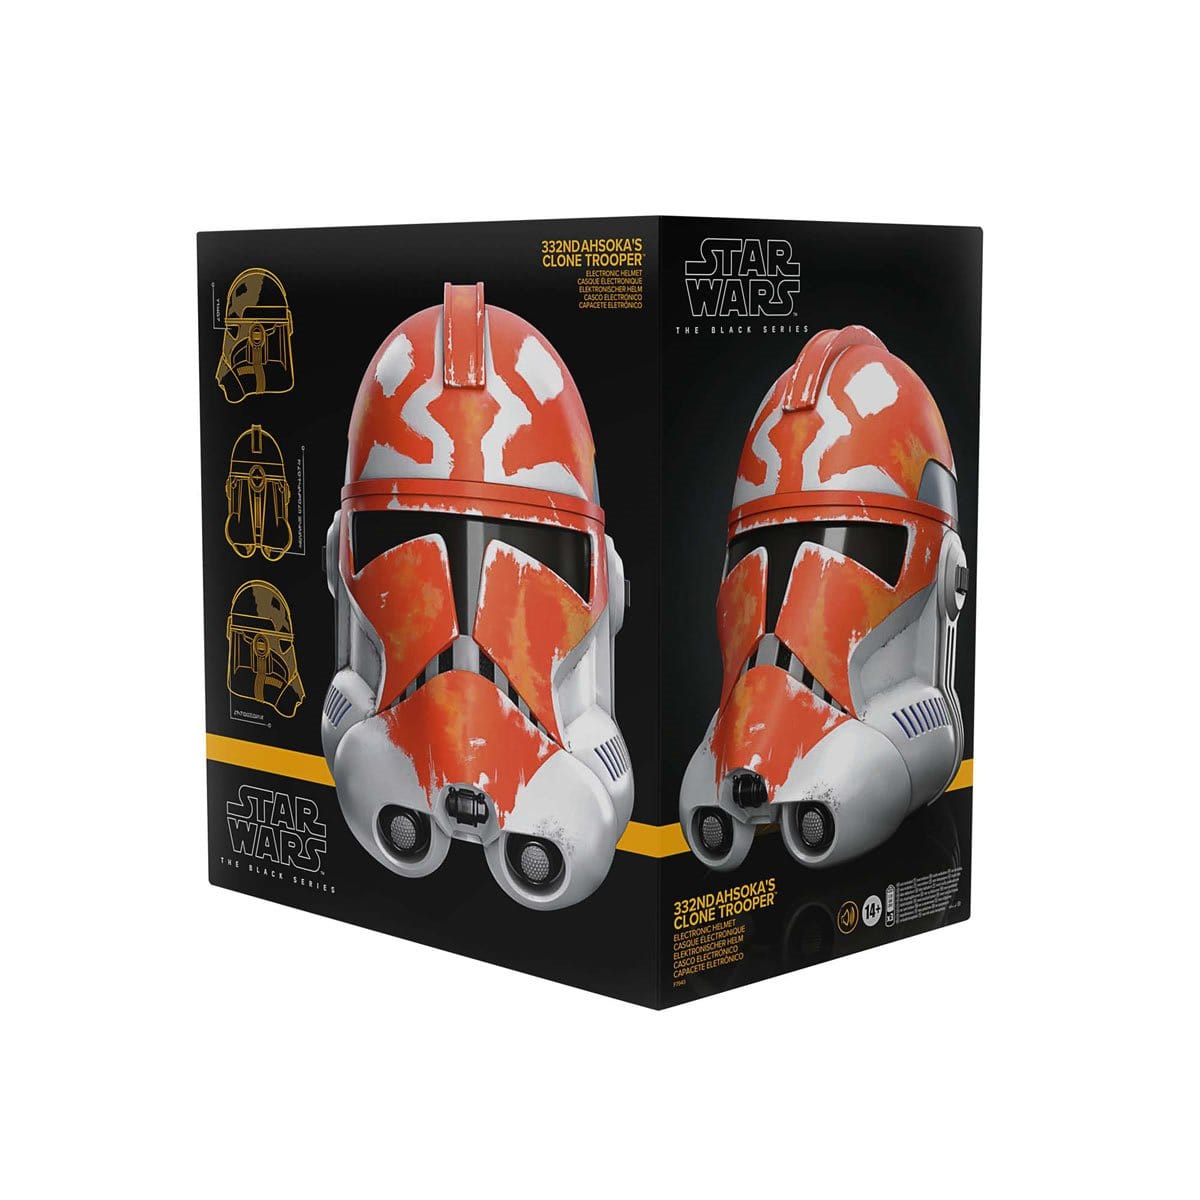 Star Wars Roleplay - The Black Series - The Clone Wars - 332nd Ahsoka’s Clone Trooper Helmet - 5L00 Box Display